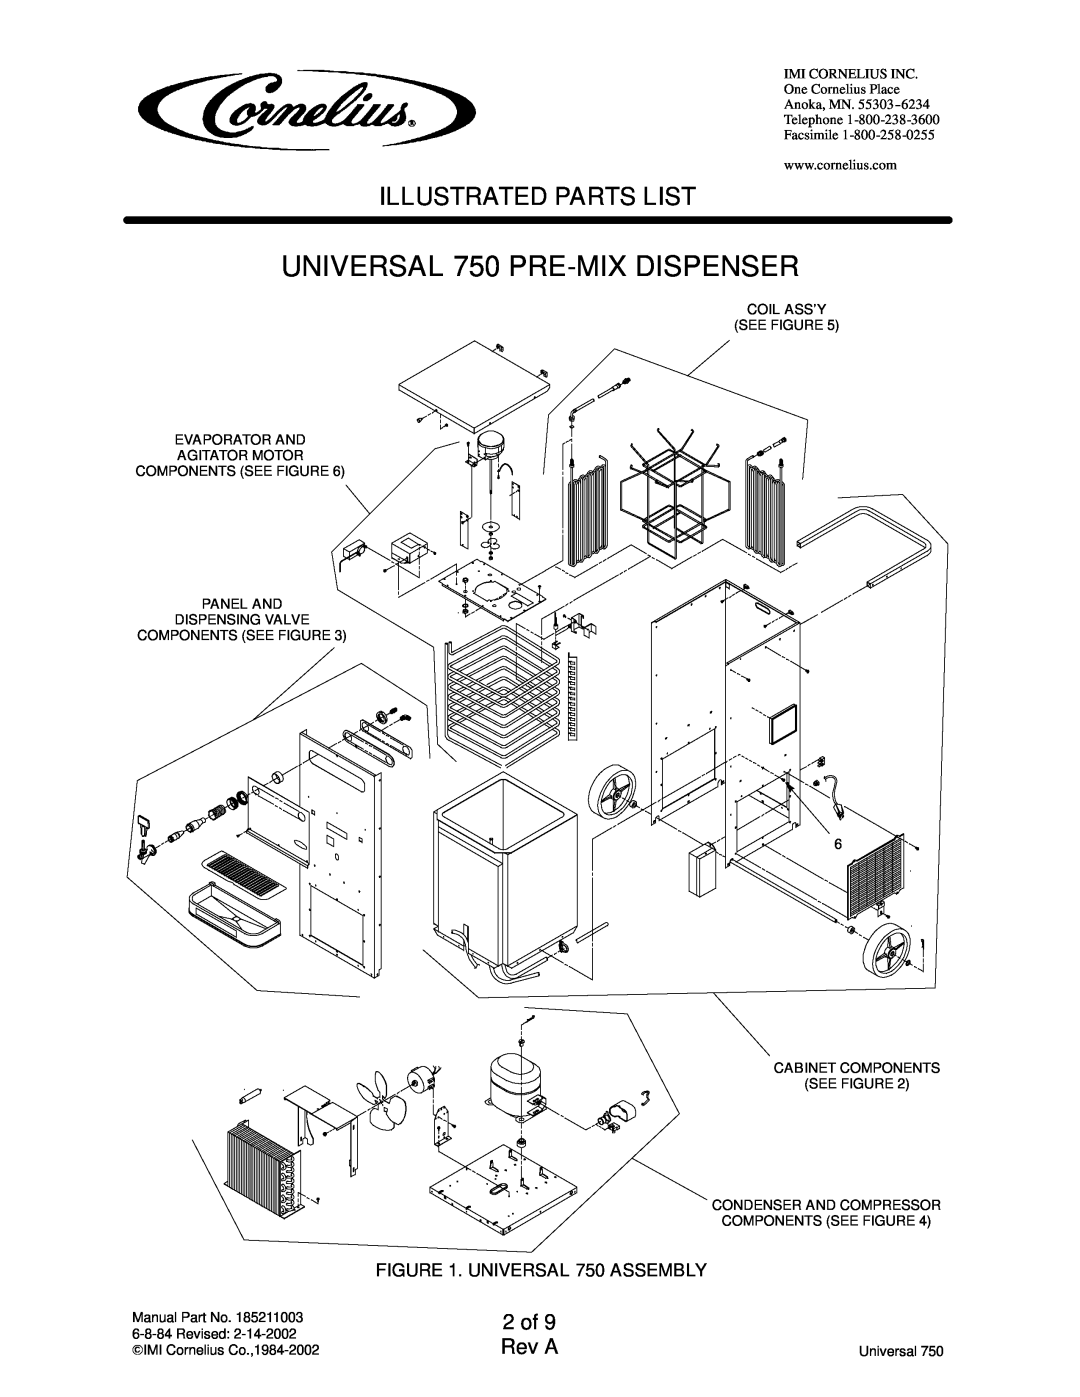 Cornelius 2849959xxx 2 of 9 Rev A, UNIVERSAL 750 PRE-MIXDISPENSER, Illustrated Parts List, Cabinet Components See Figure 